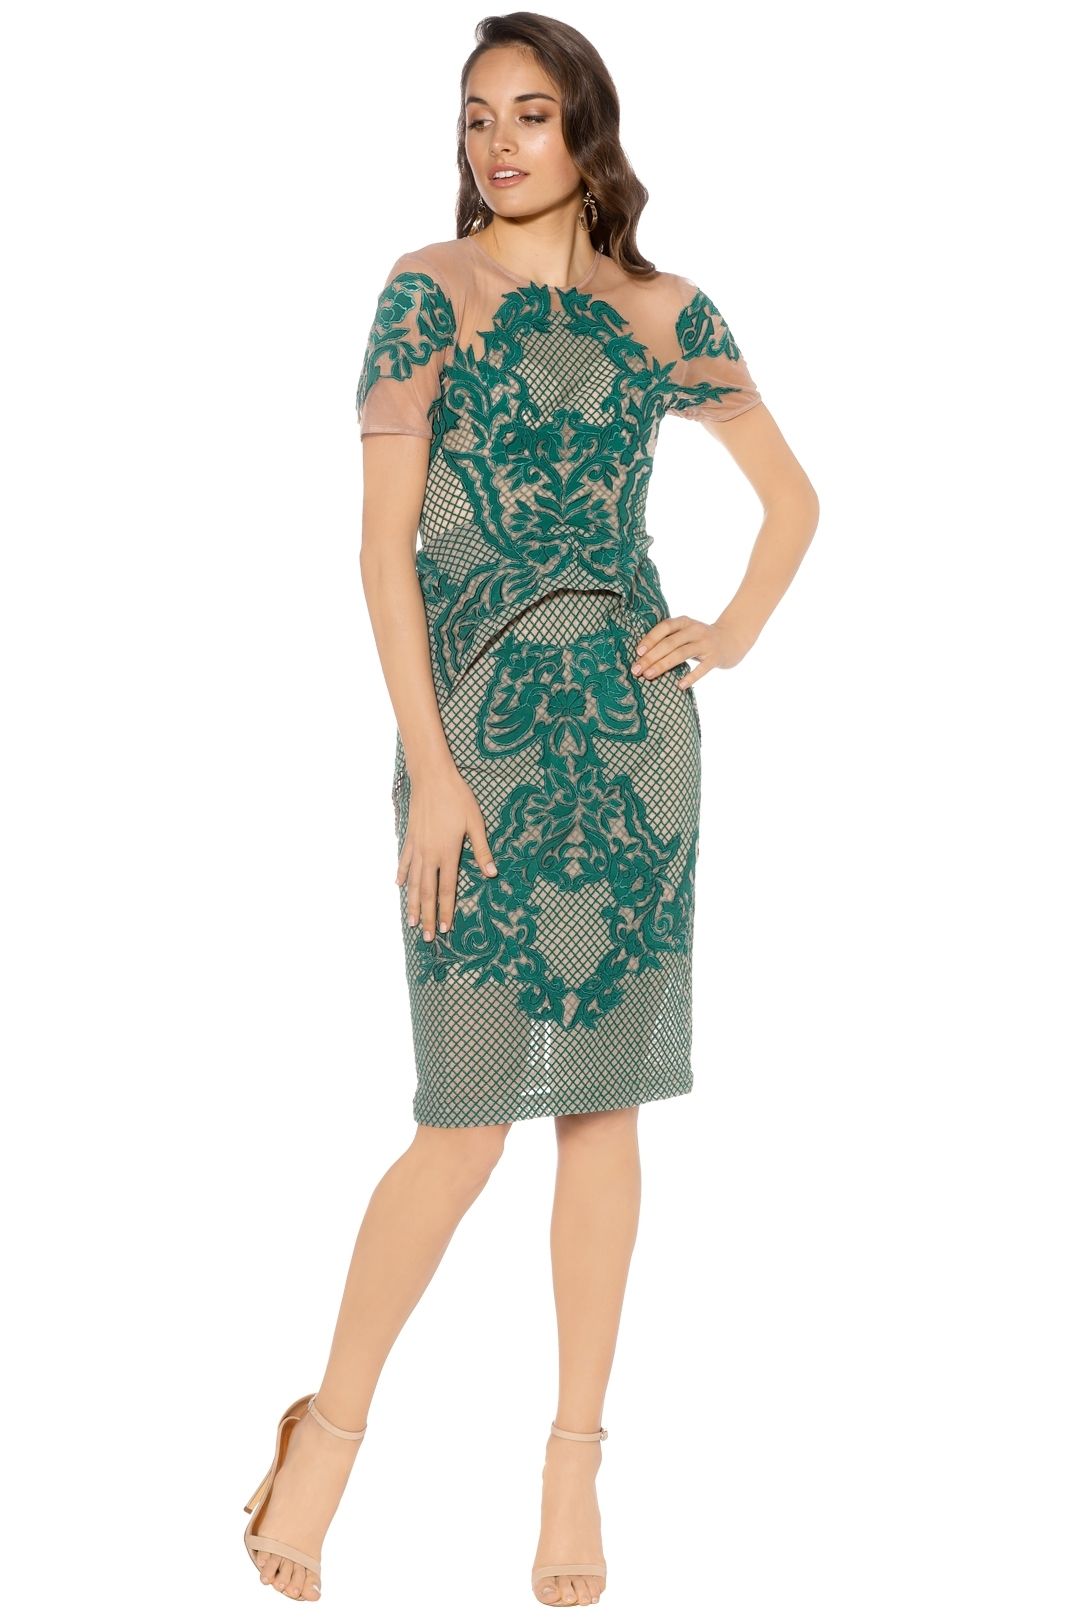 Thurley - Rosetta Stone Dress - Emerald - Front